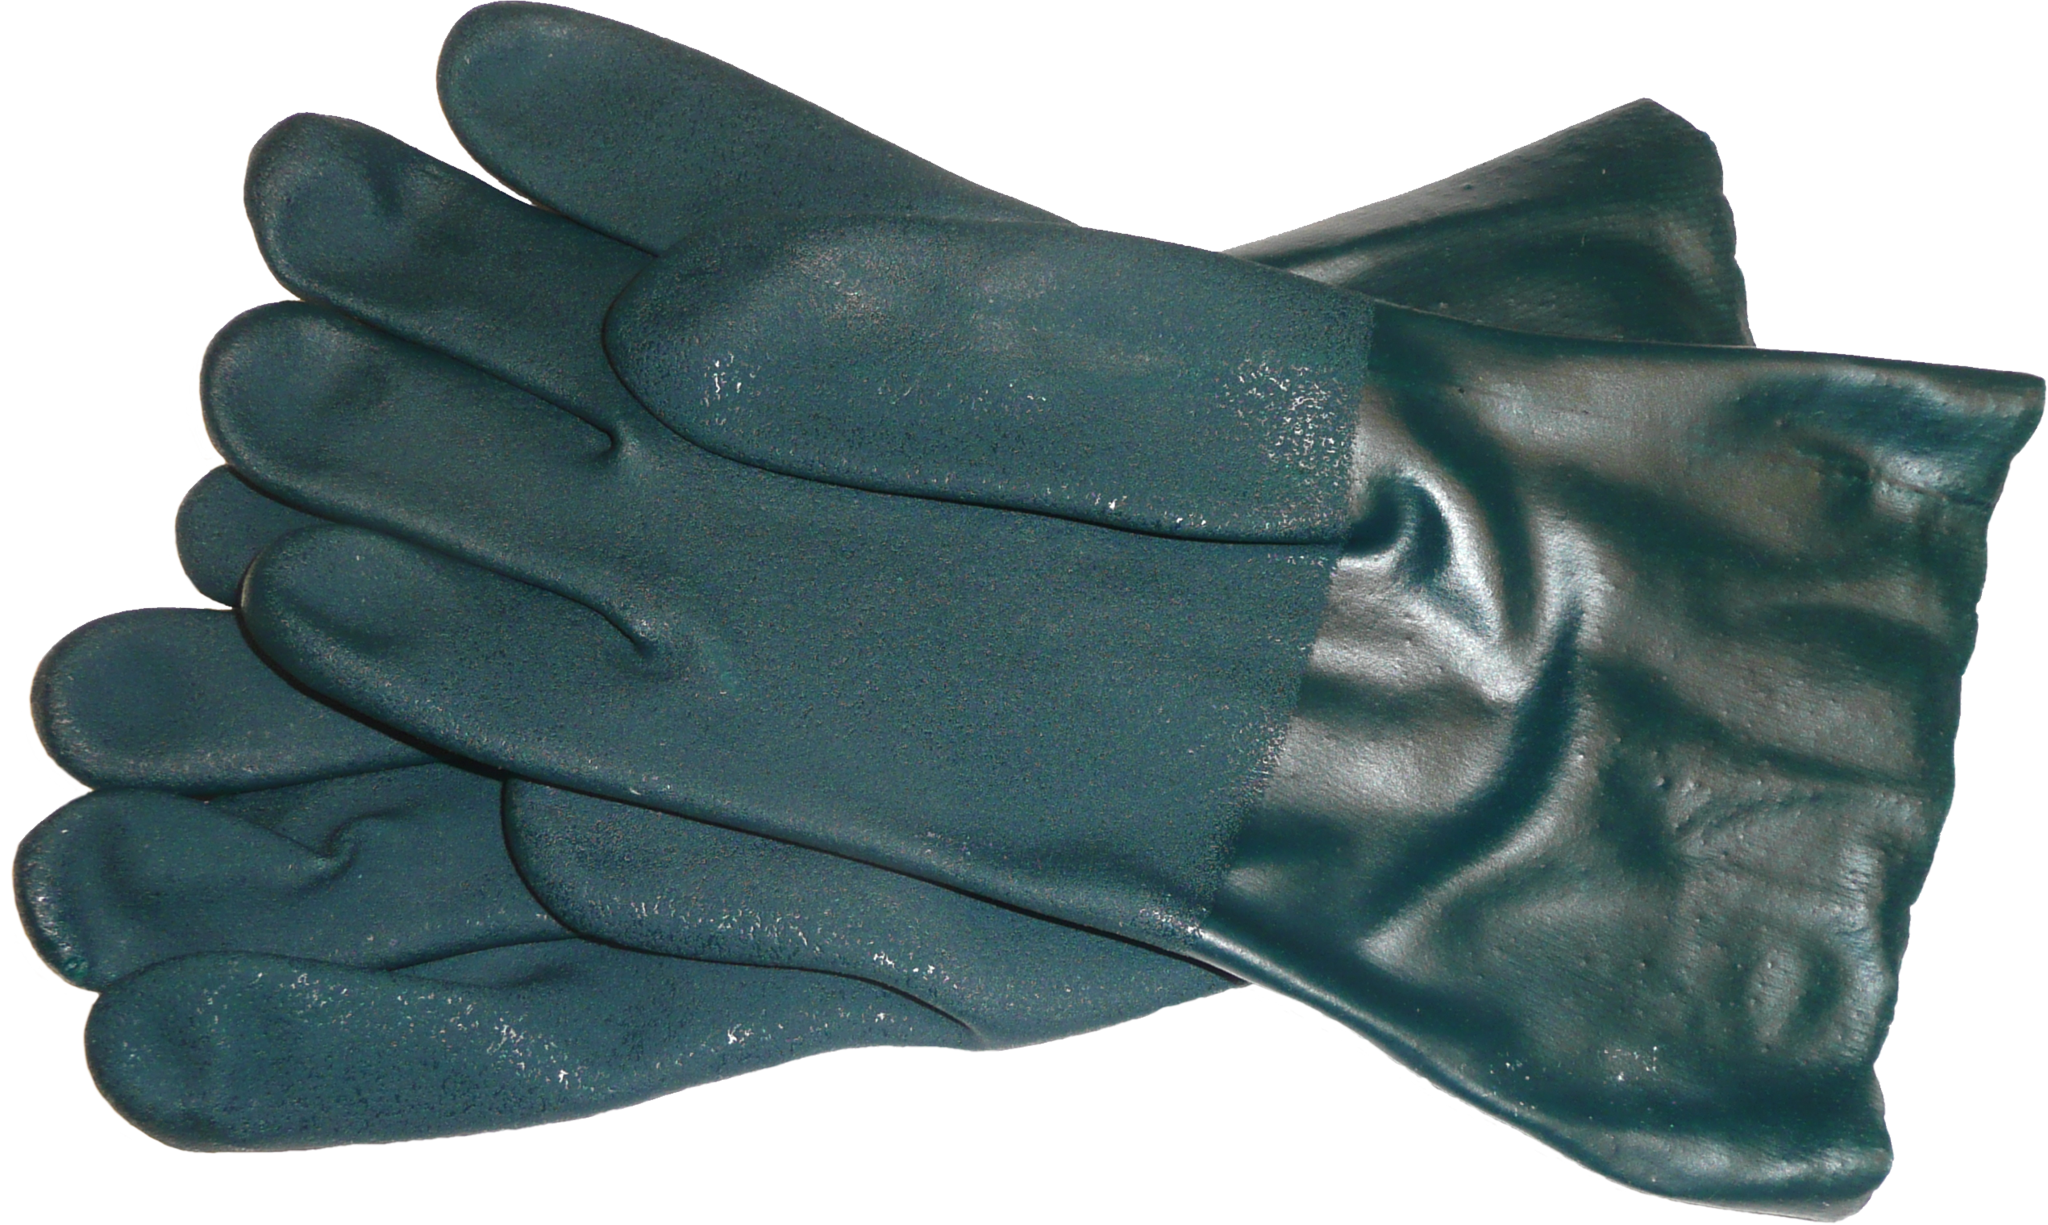 Safety Gloves, heat resistant (914-207)